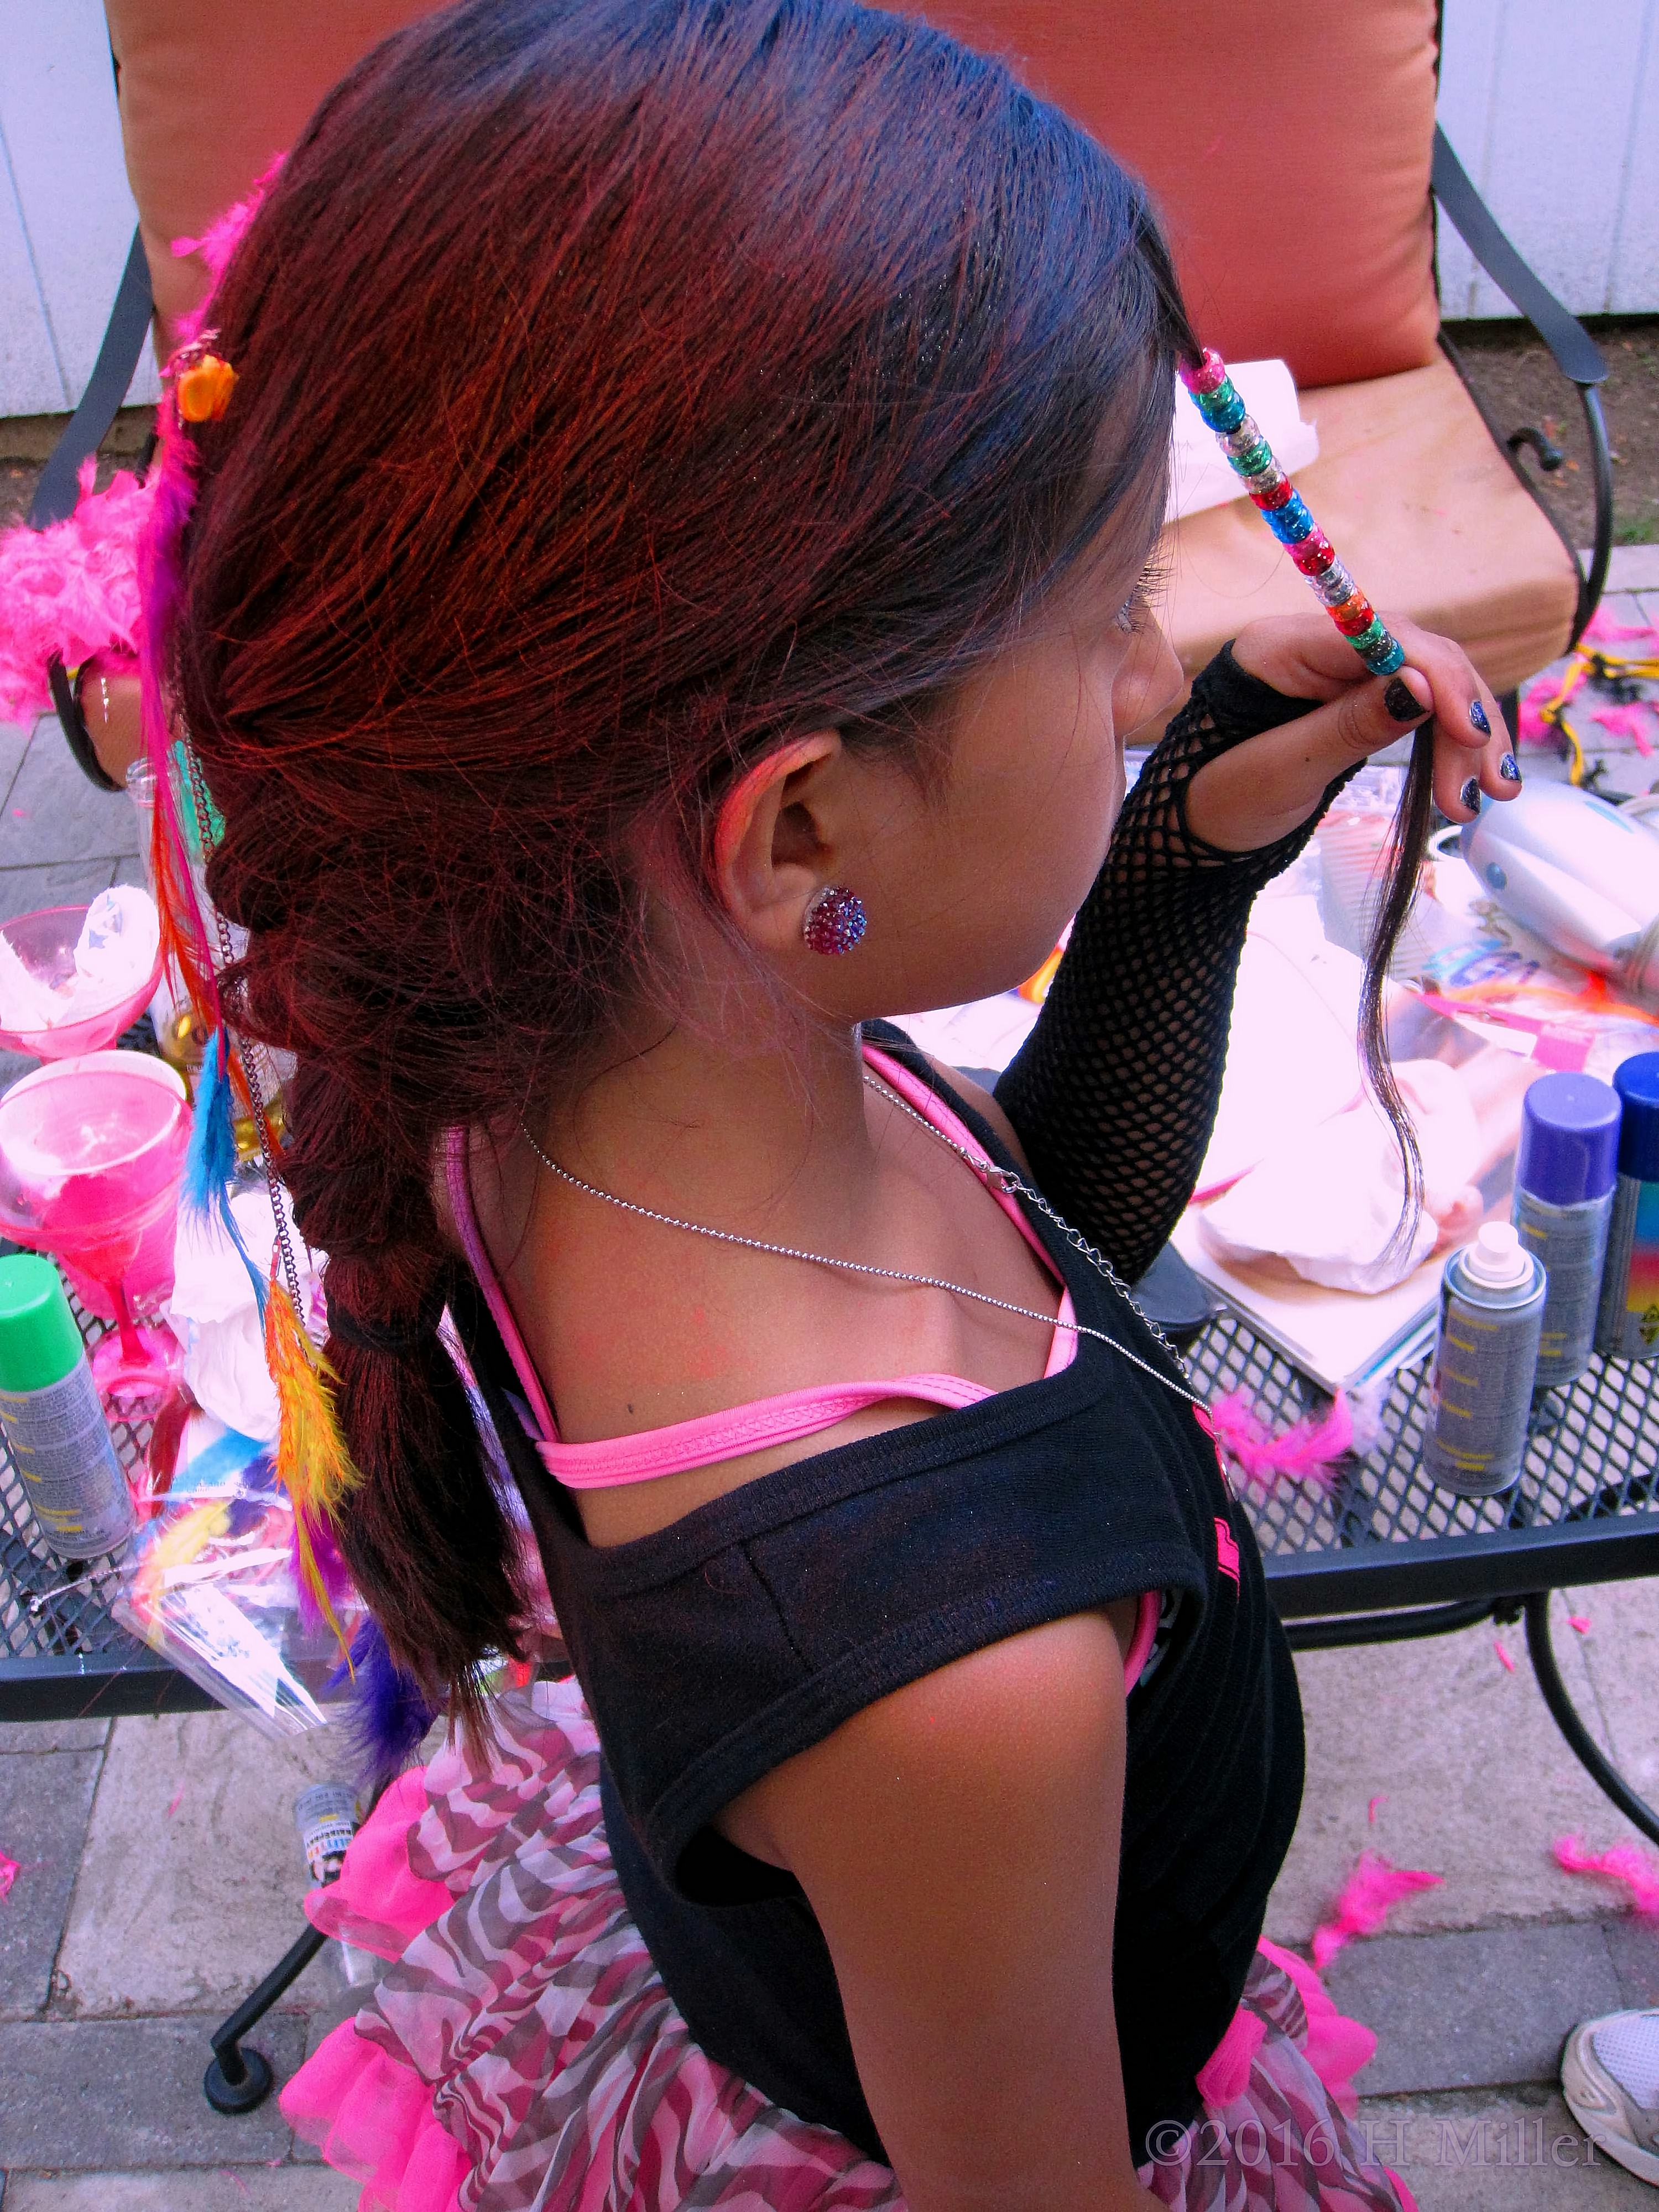 Kids Temporary Hair Dye And Beads.